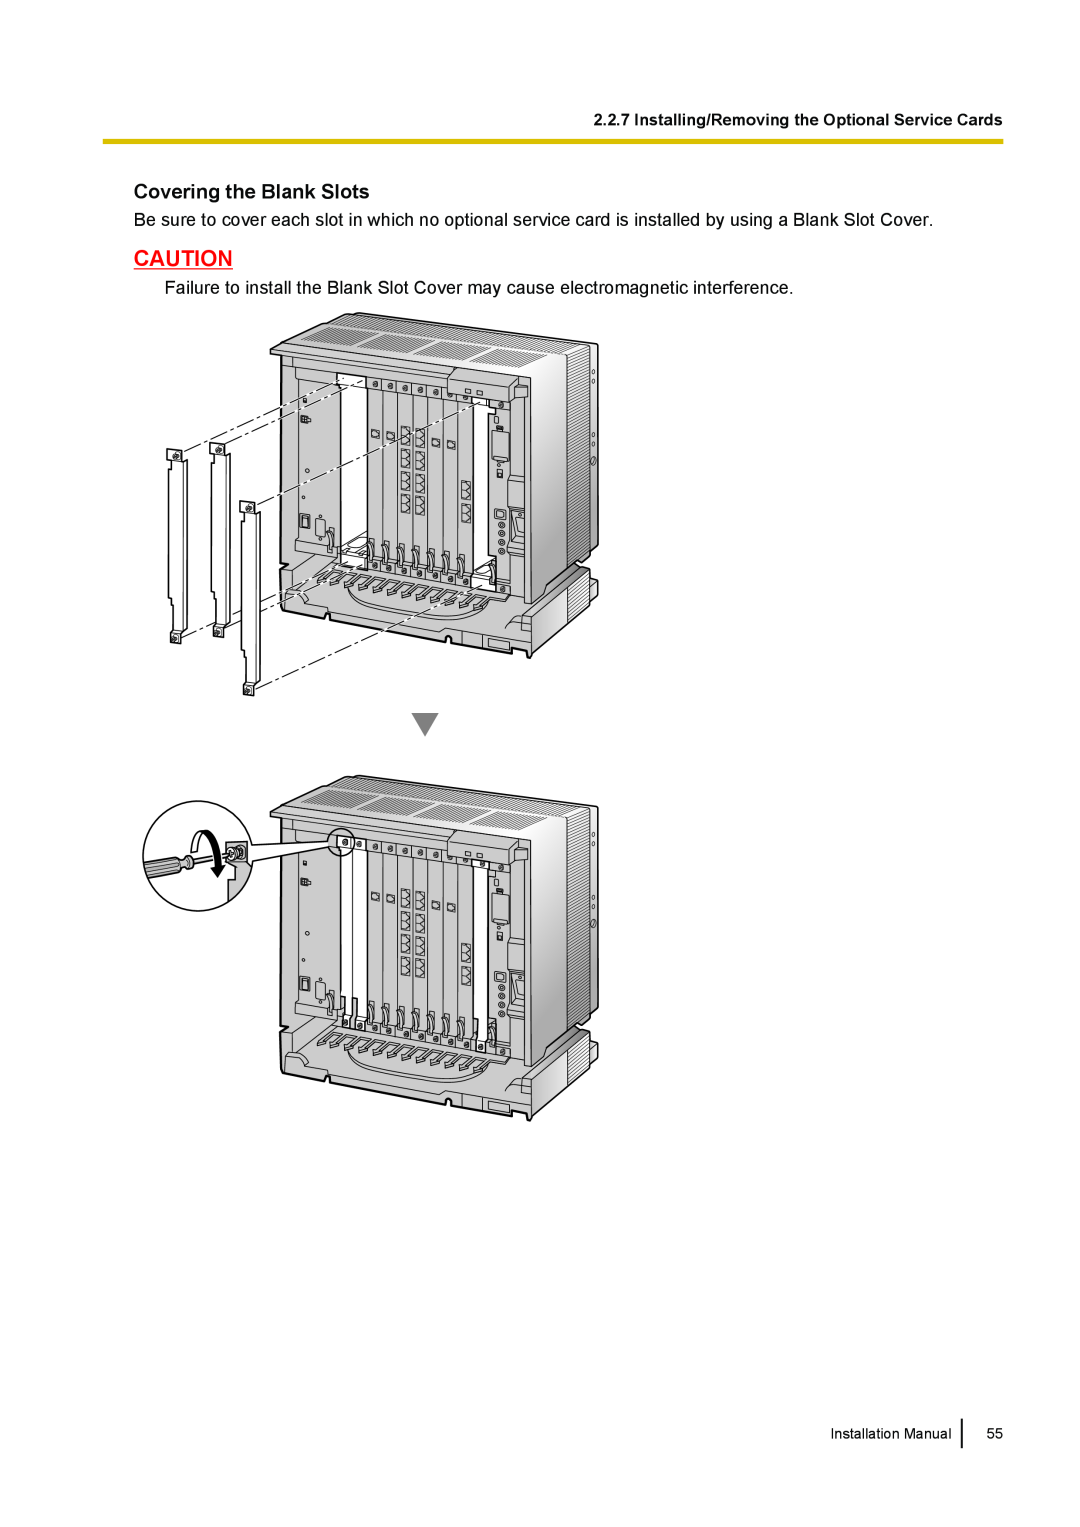 Panasonic KX-TDA100 installation manual Covering the Blank Slots 